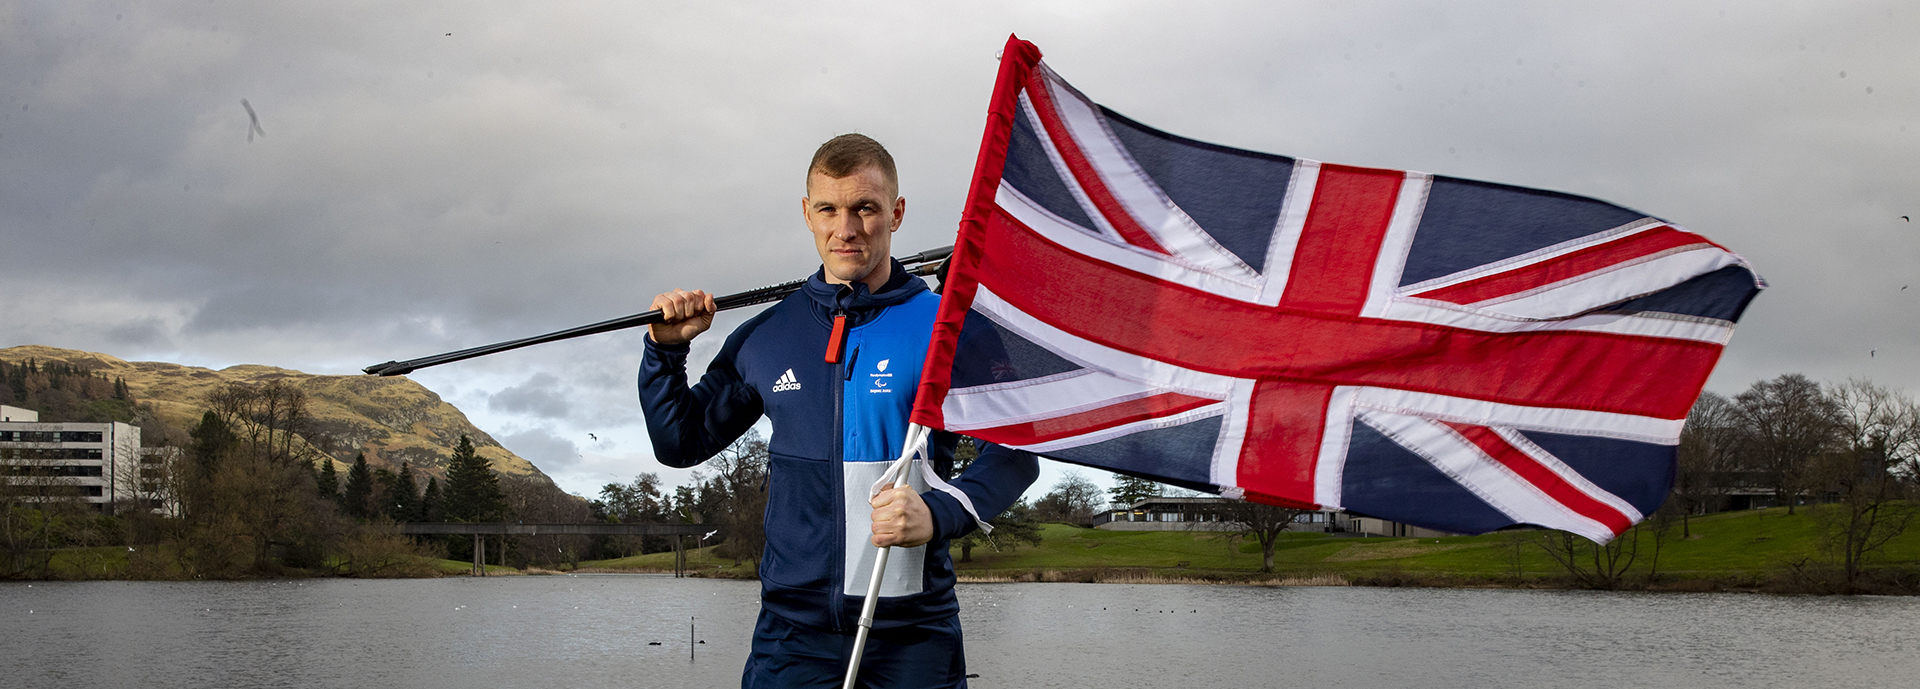 Scott Meenagh with GB flag and ski poles